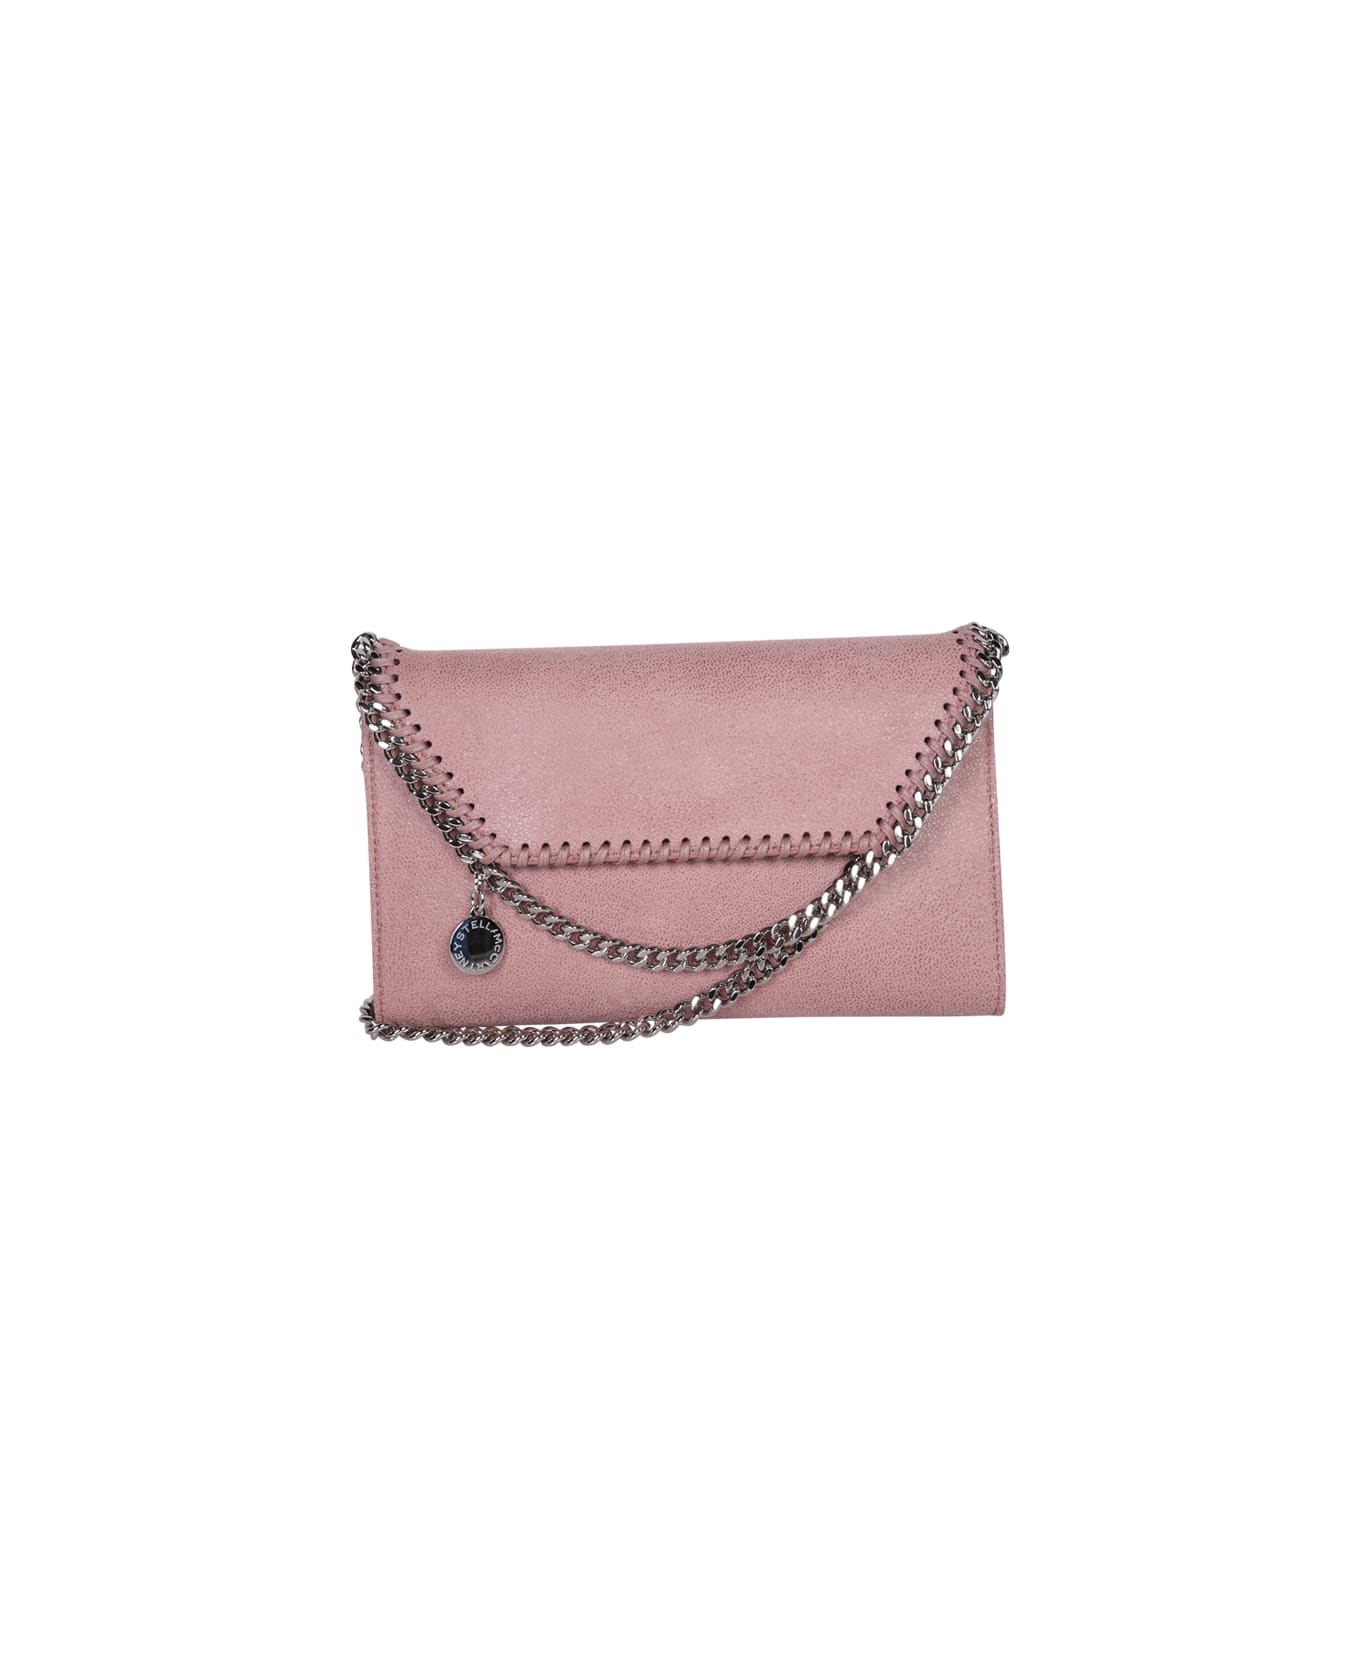 Stella McCartney Falabella Cross-body Pink Bag - Pink